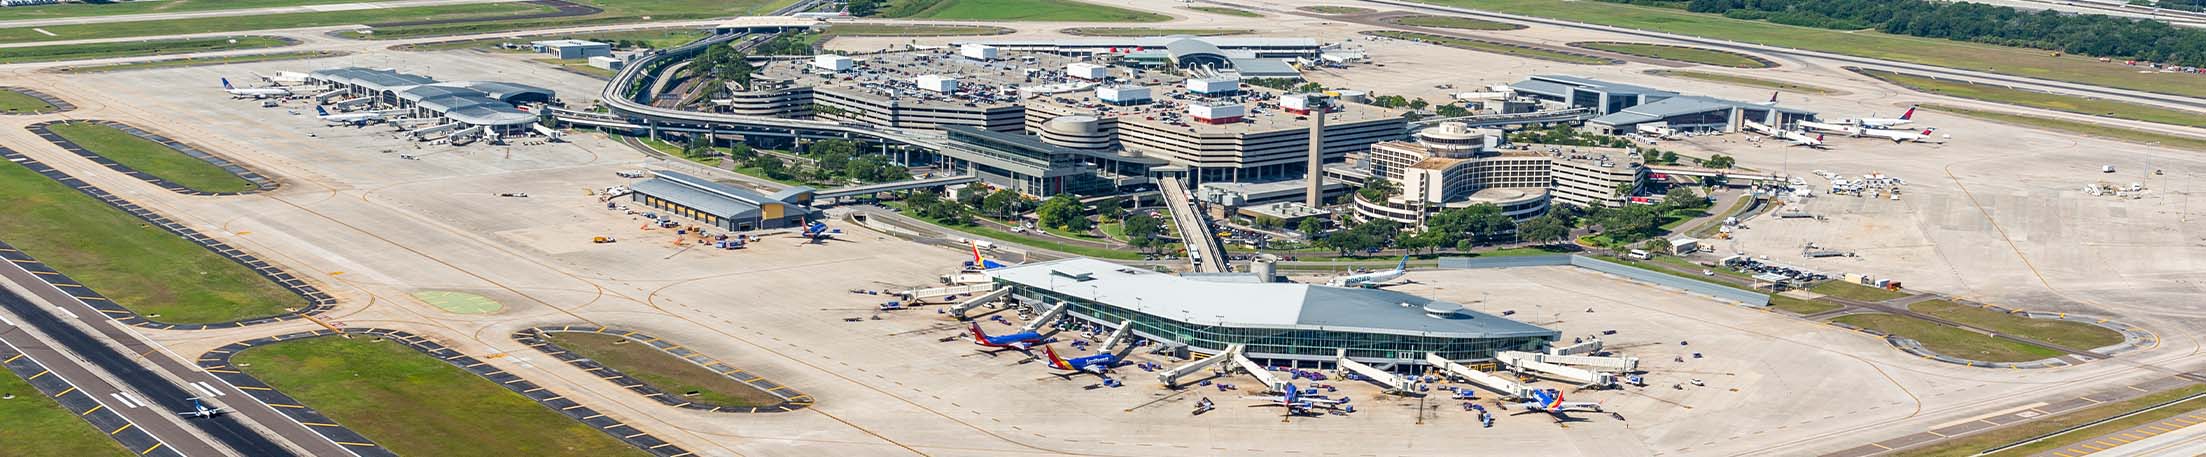 Airport aerial image